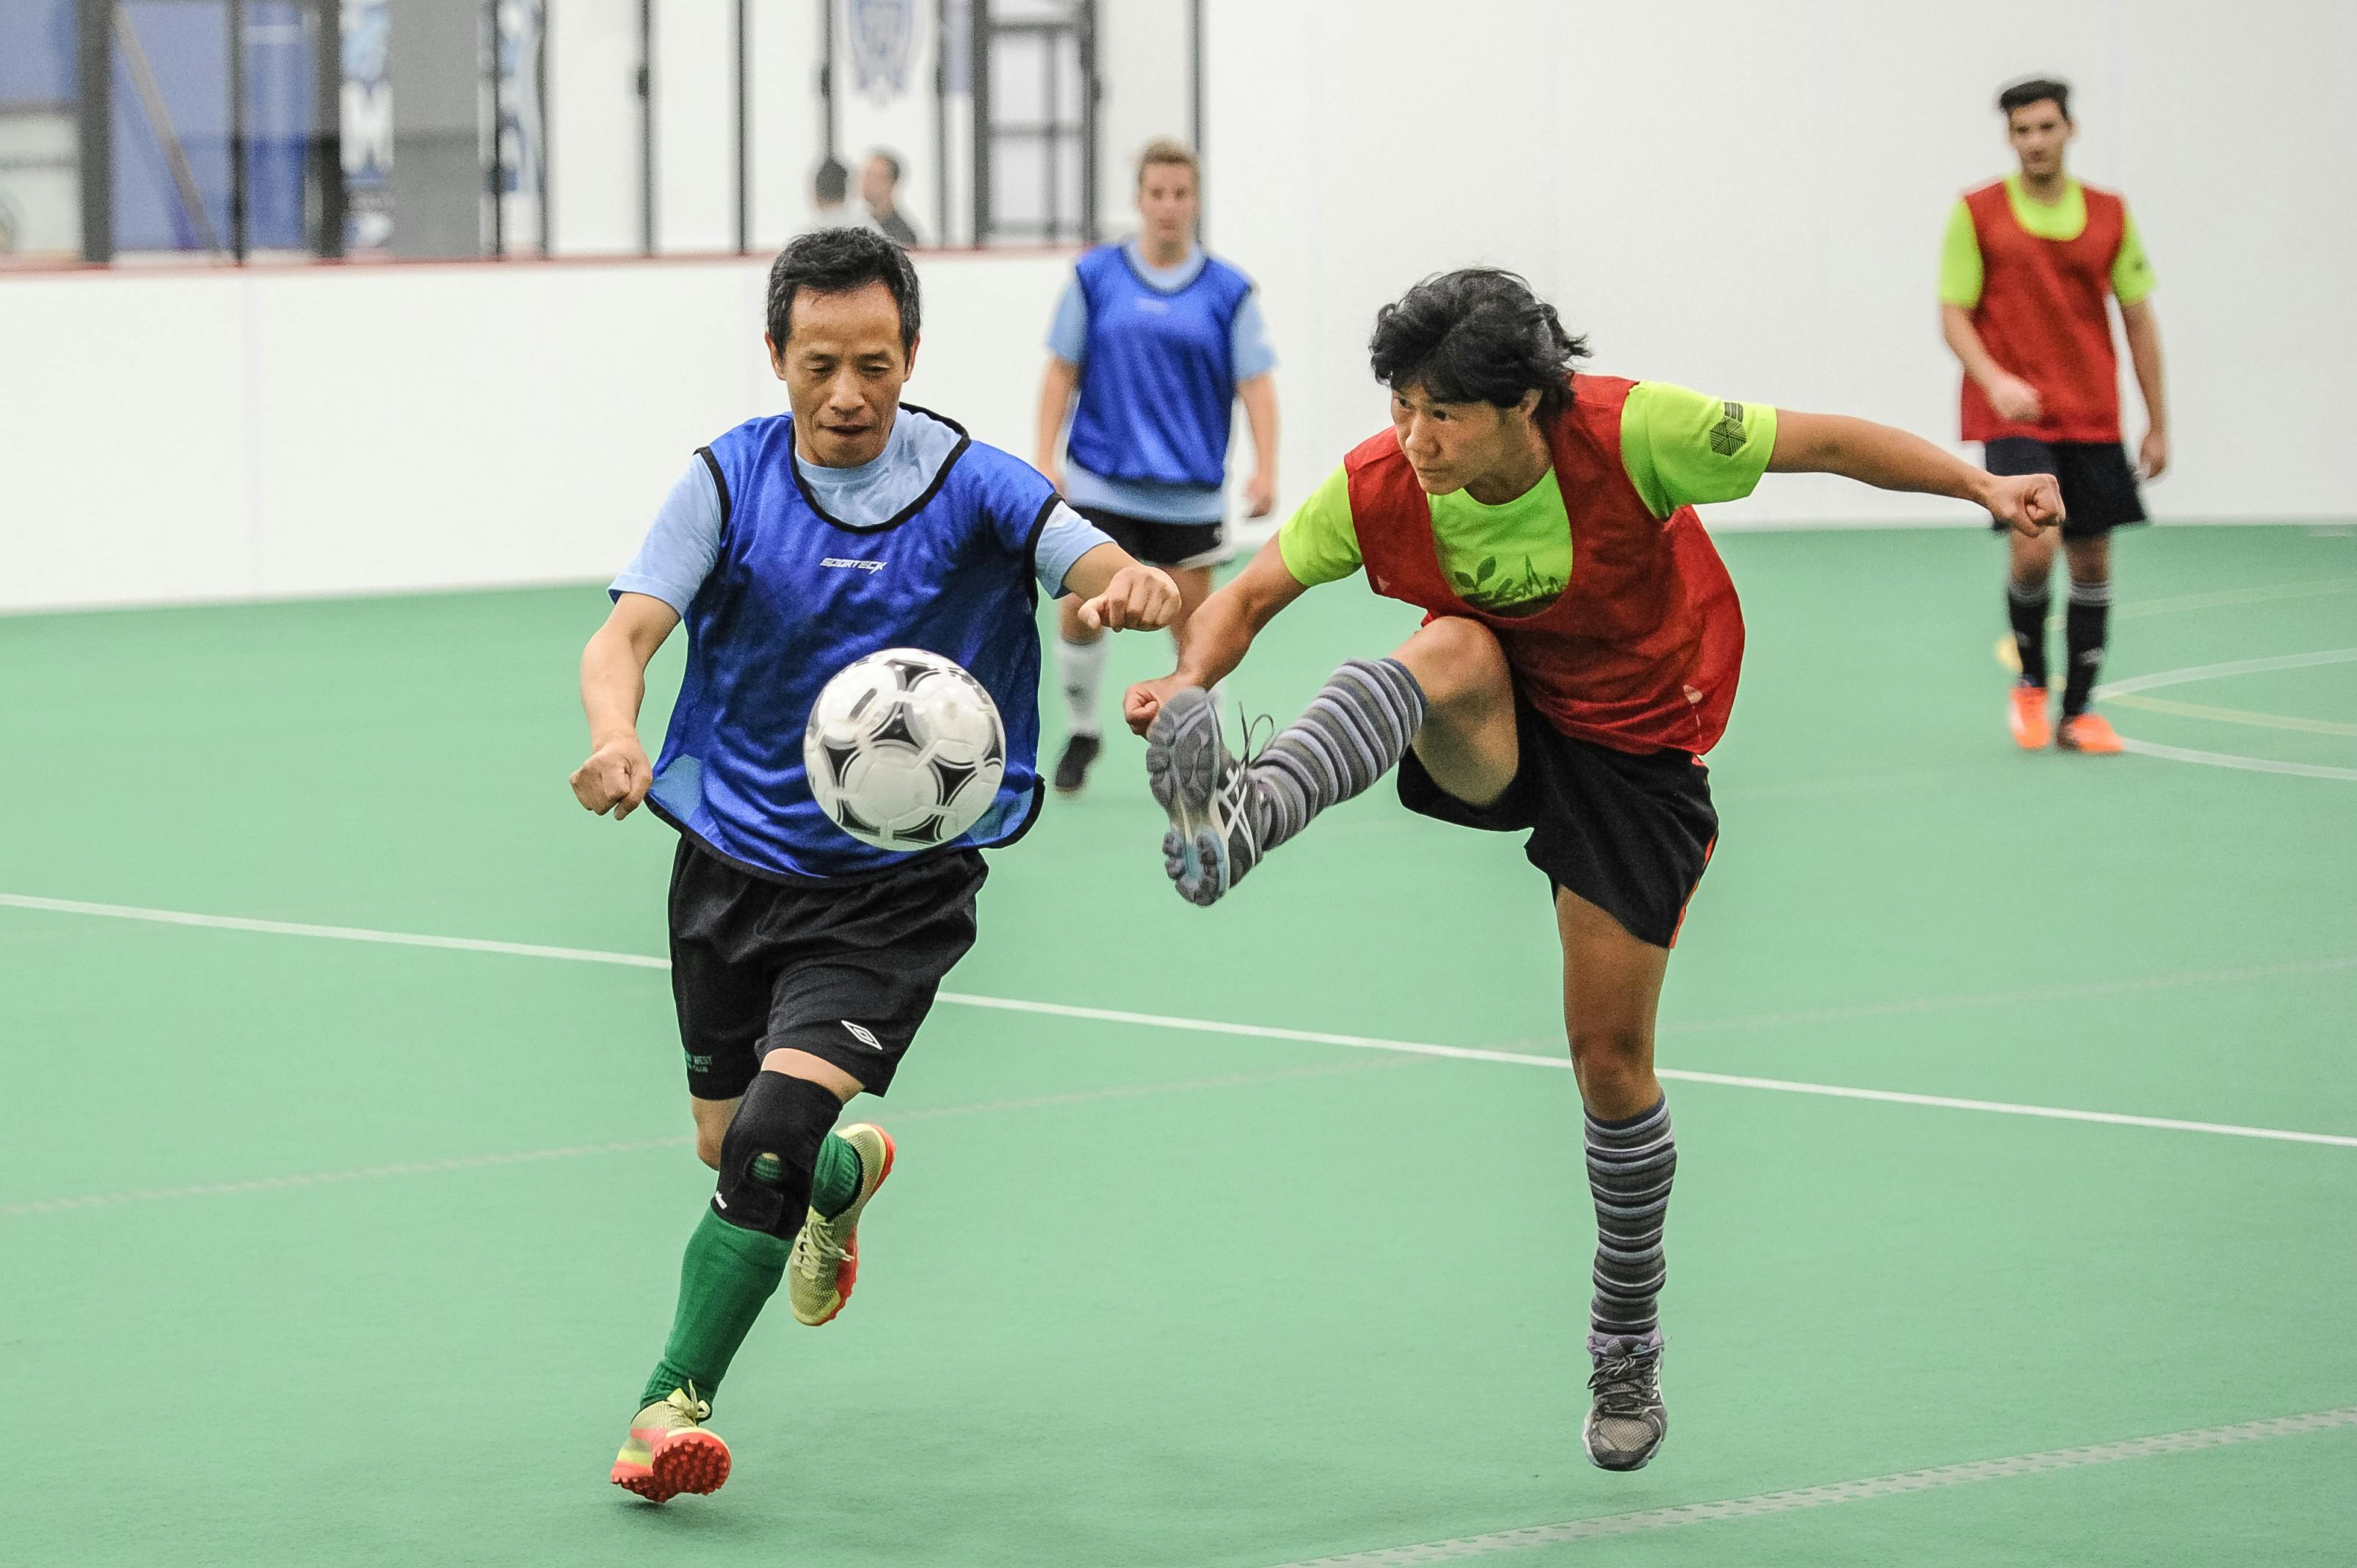 teams playing soccer